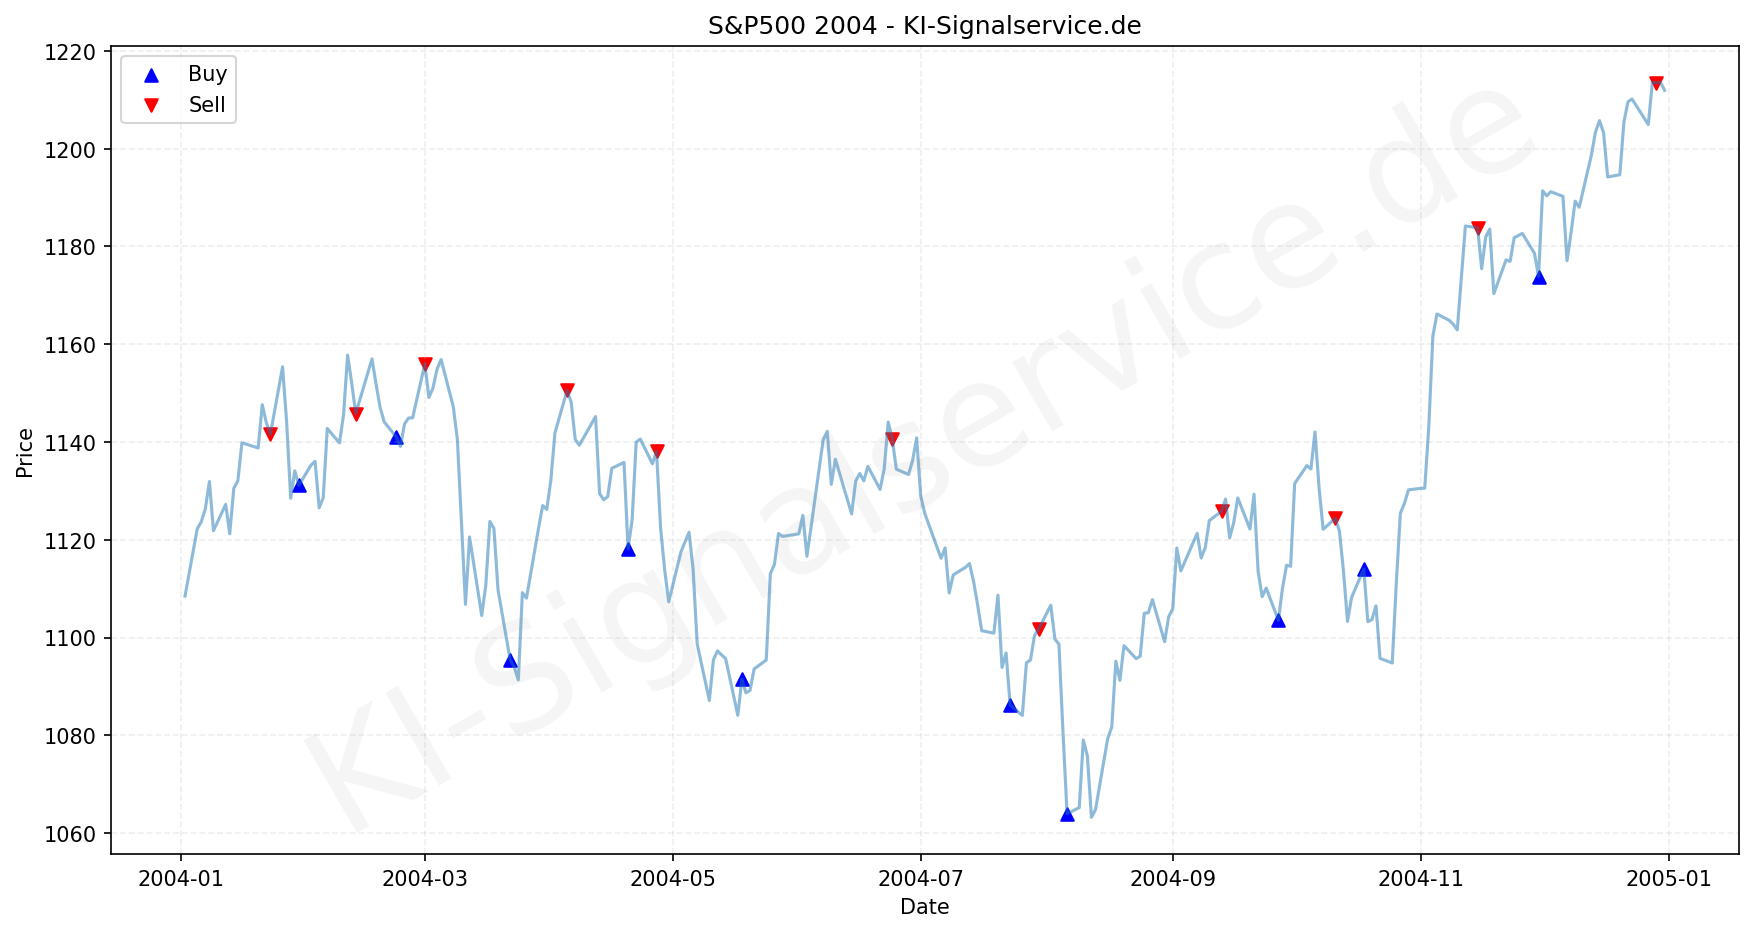 SP500 Index Performance Chart - KI Tradingsignale 2004